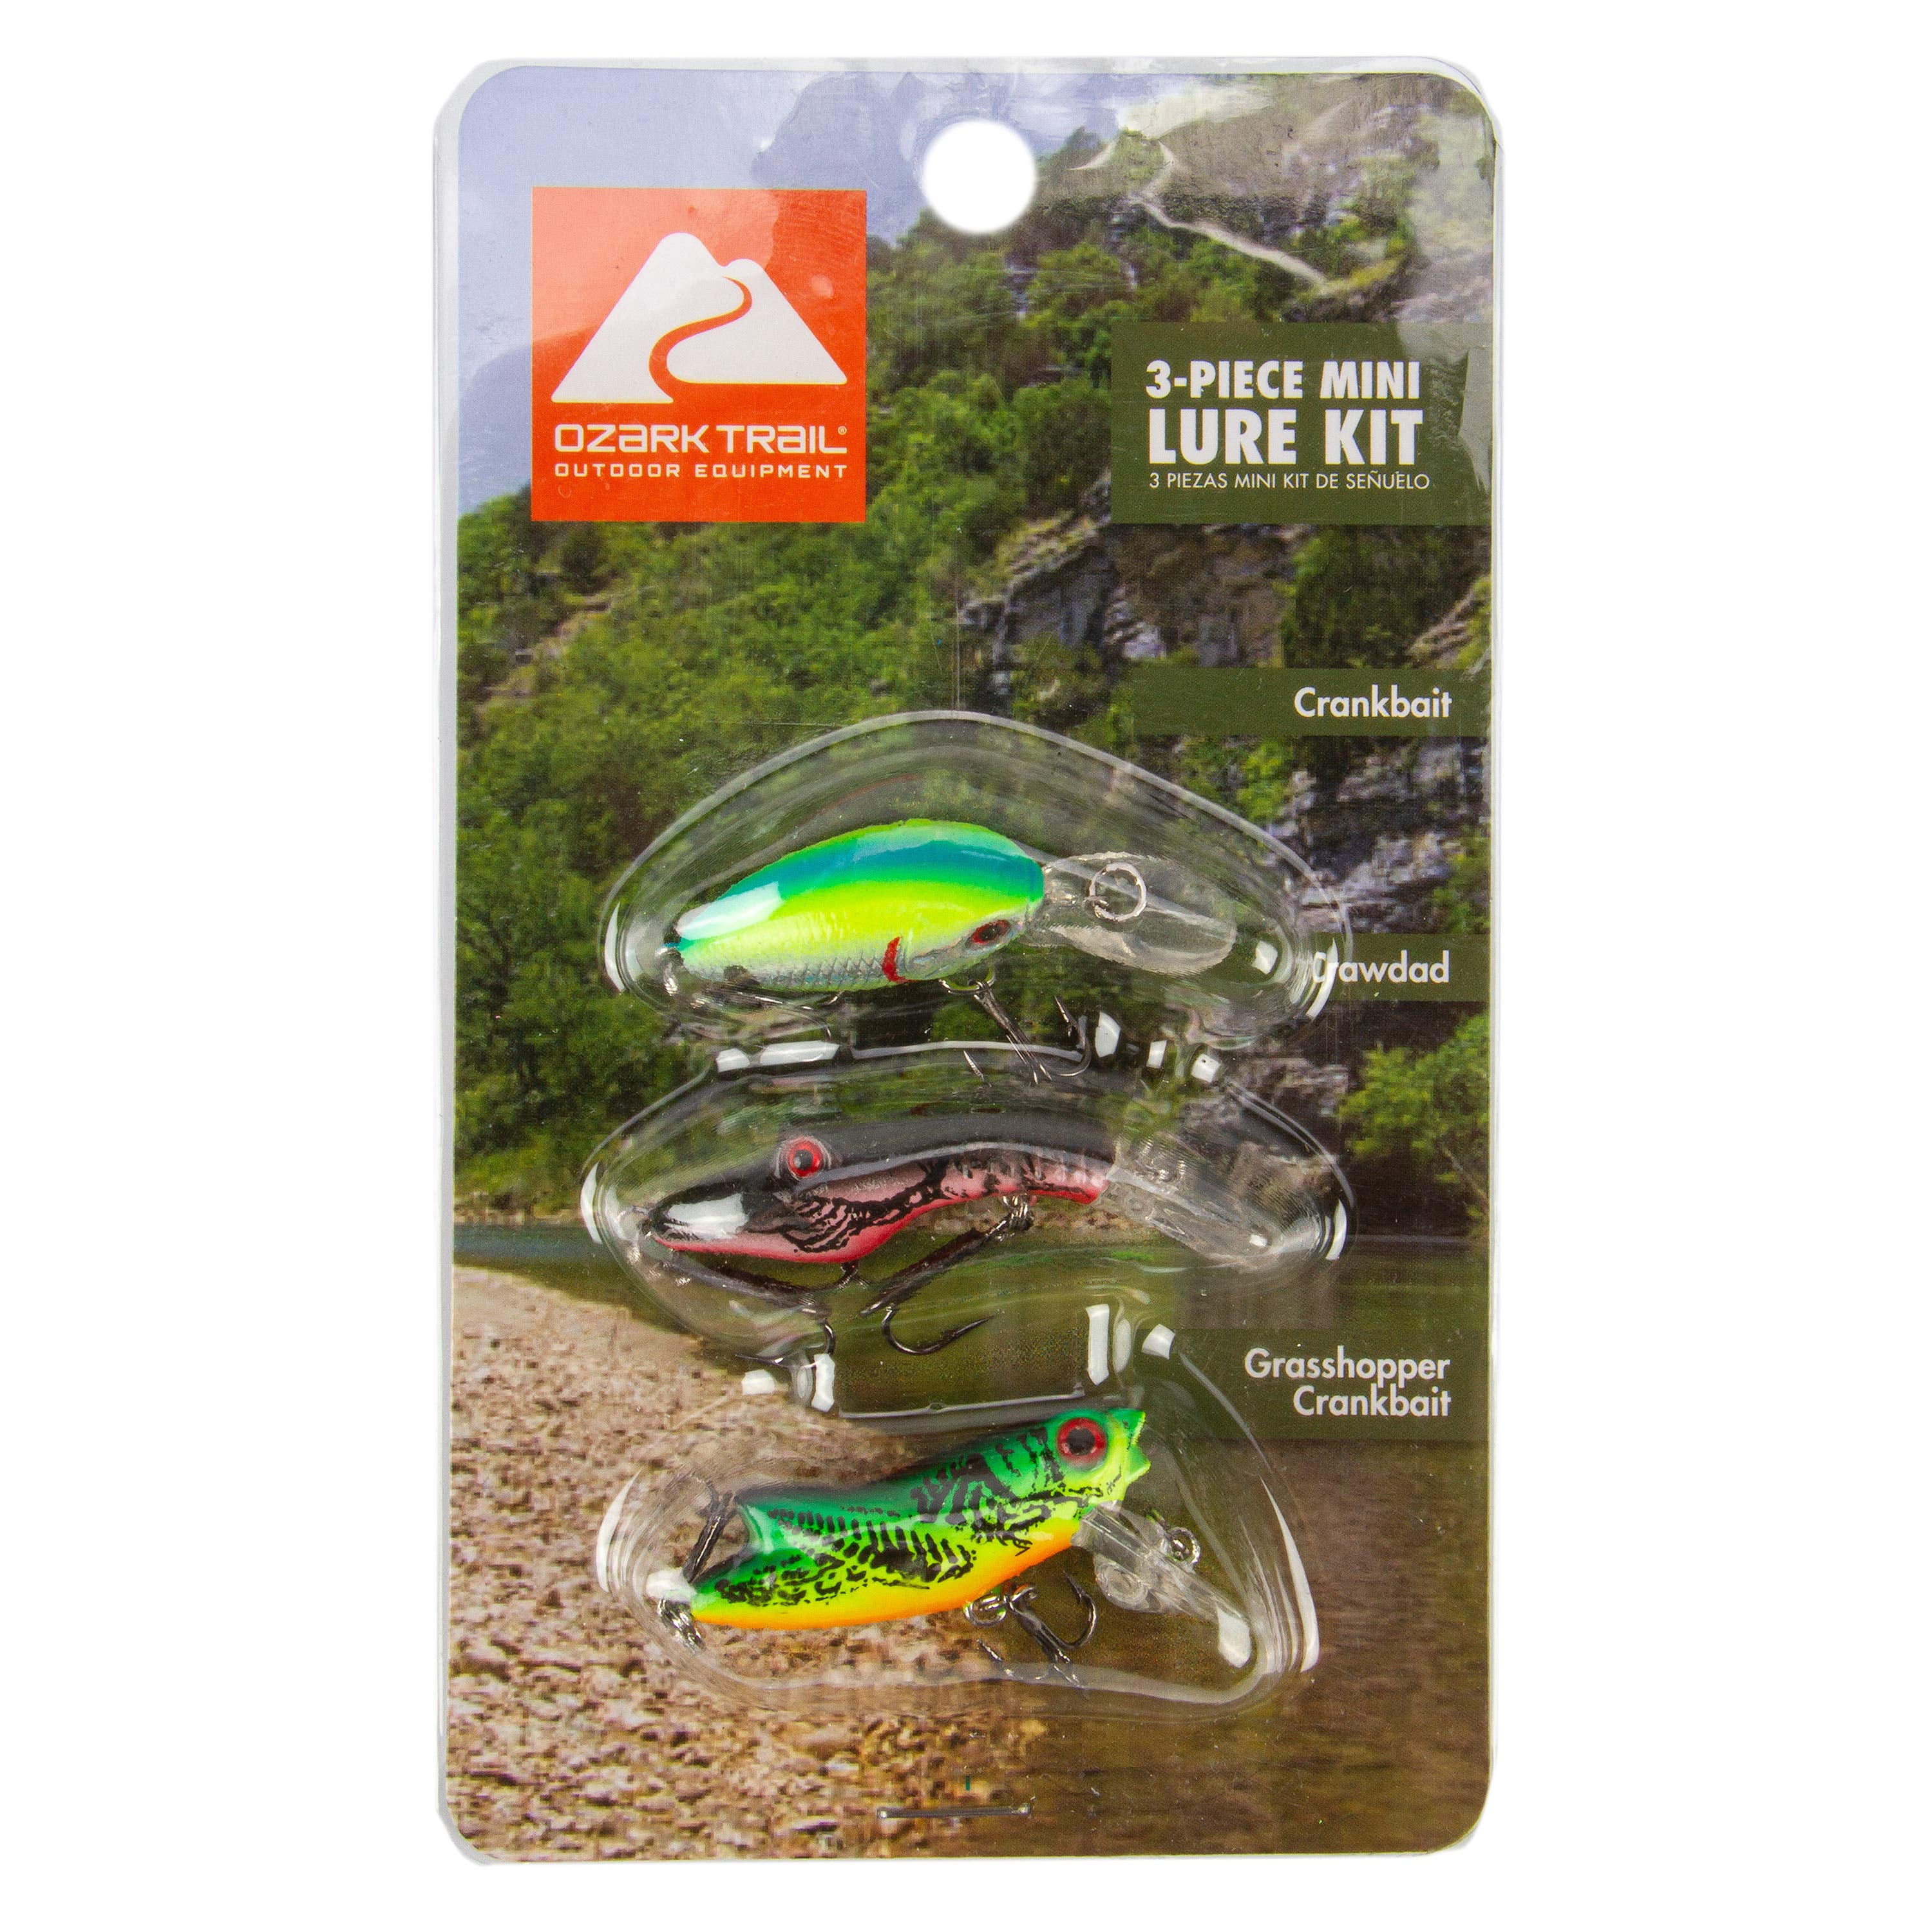 Ozark Trail 3-Piece Frog Lure Kit with Utility Box 